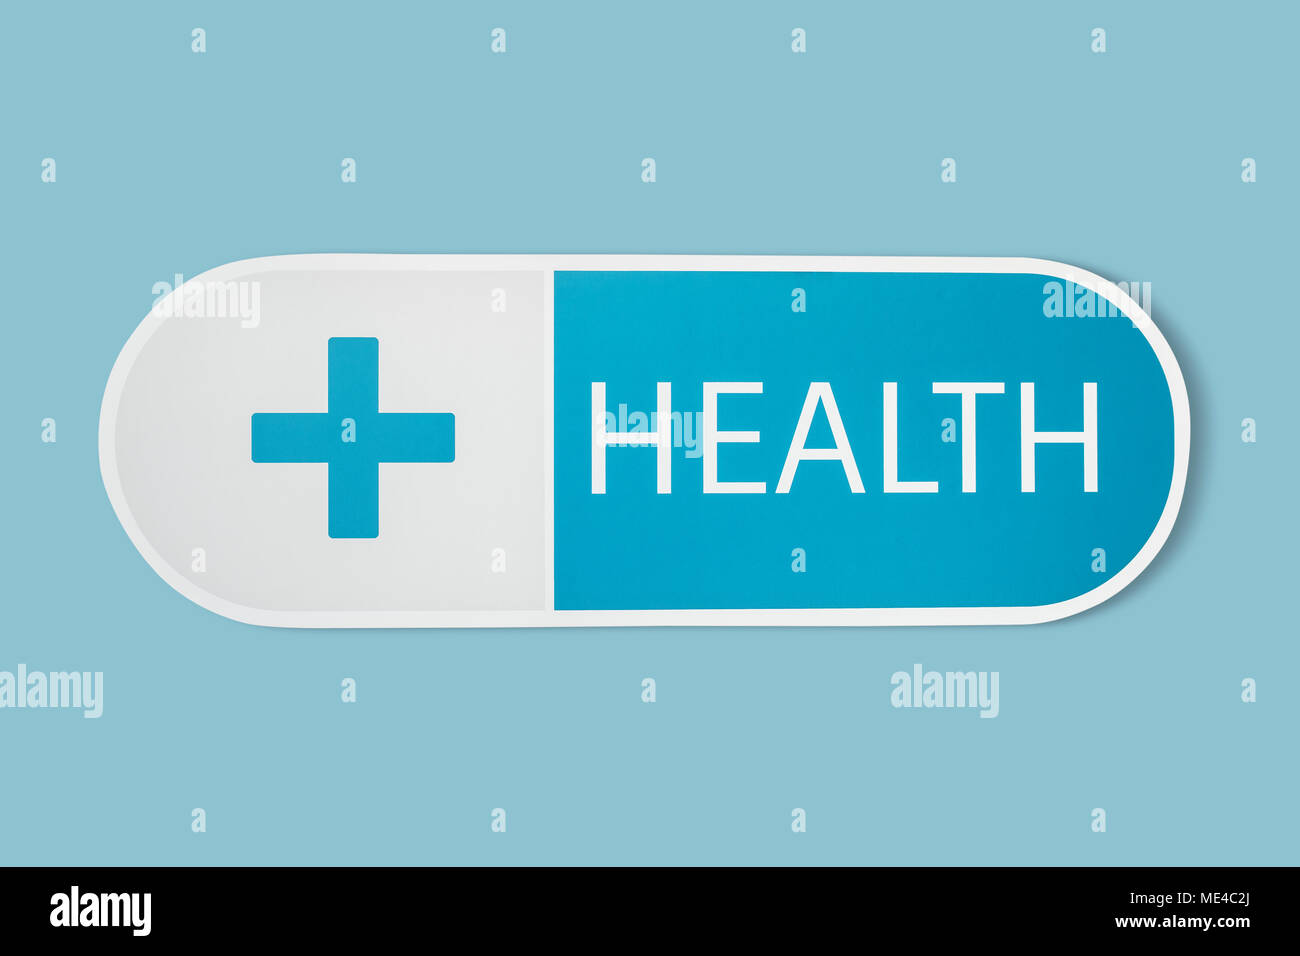 Health and medicine medical icon Stock Photo